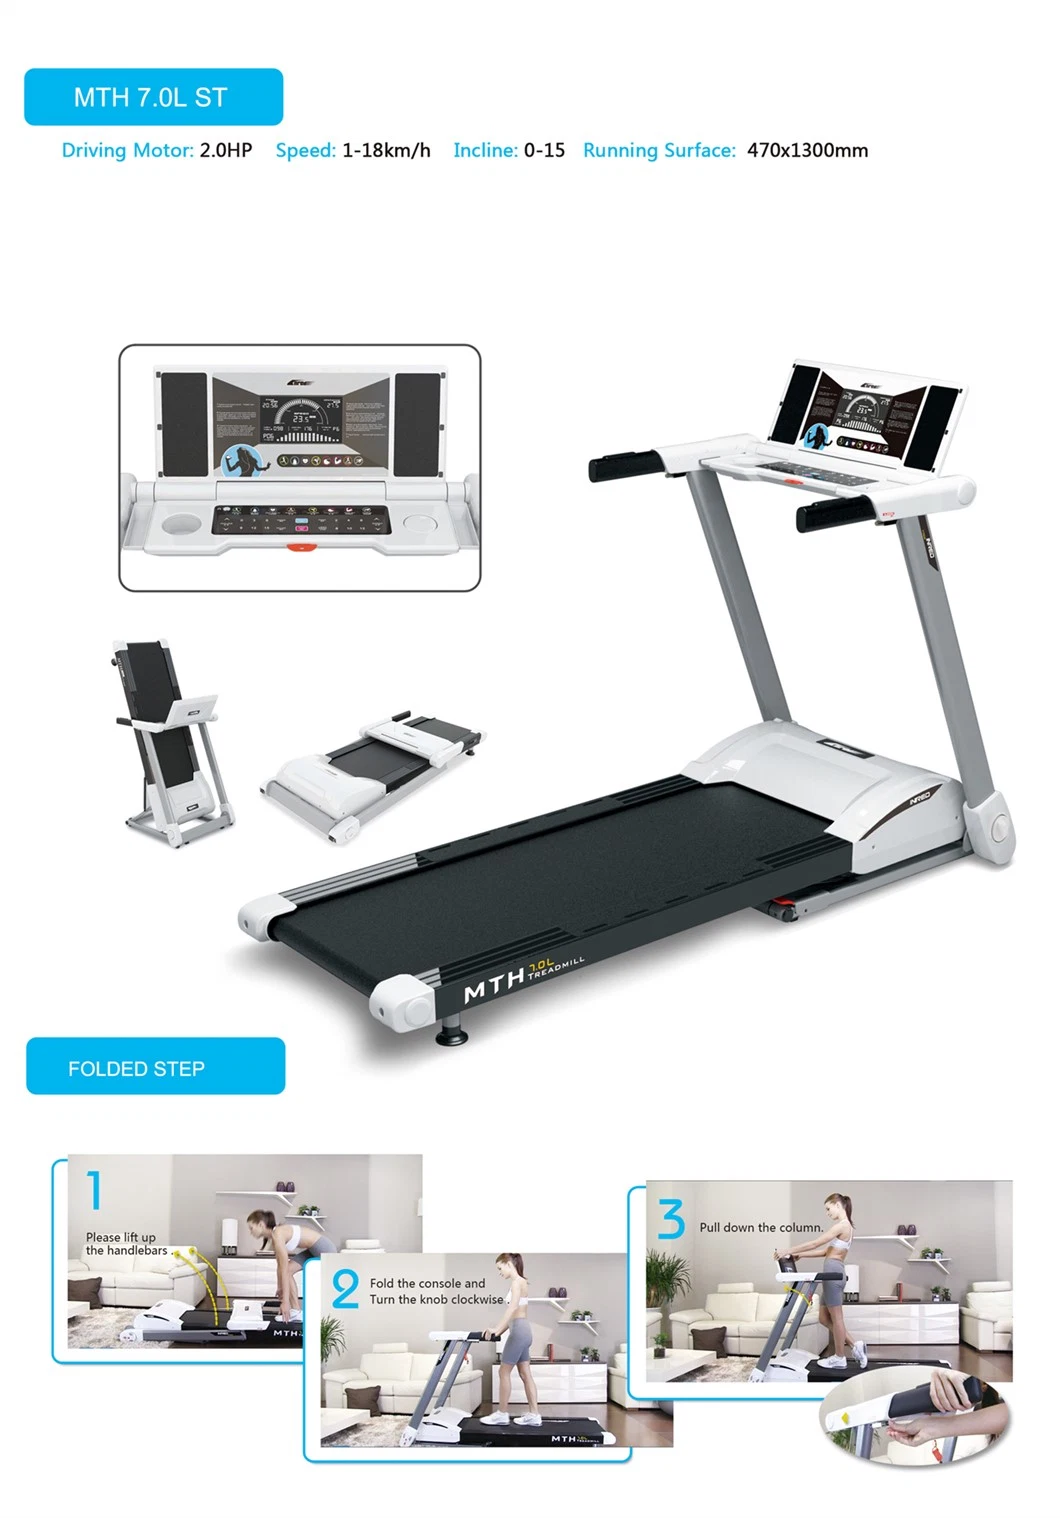 High-Quality Mth7.0L Treadmill Domestic Foldable Cardio Equipment